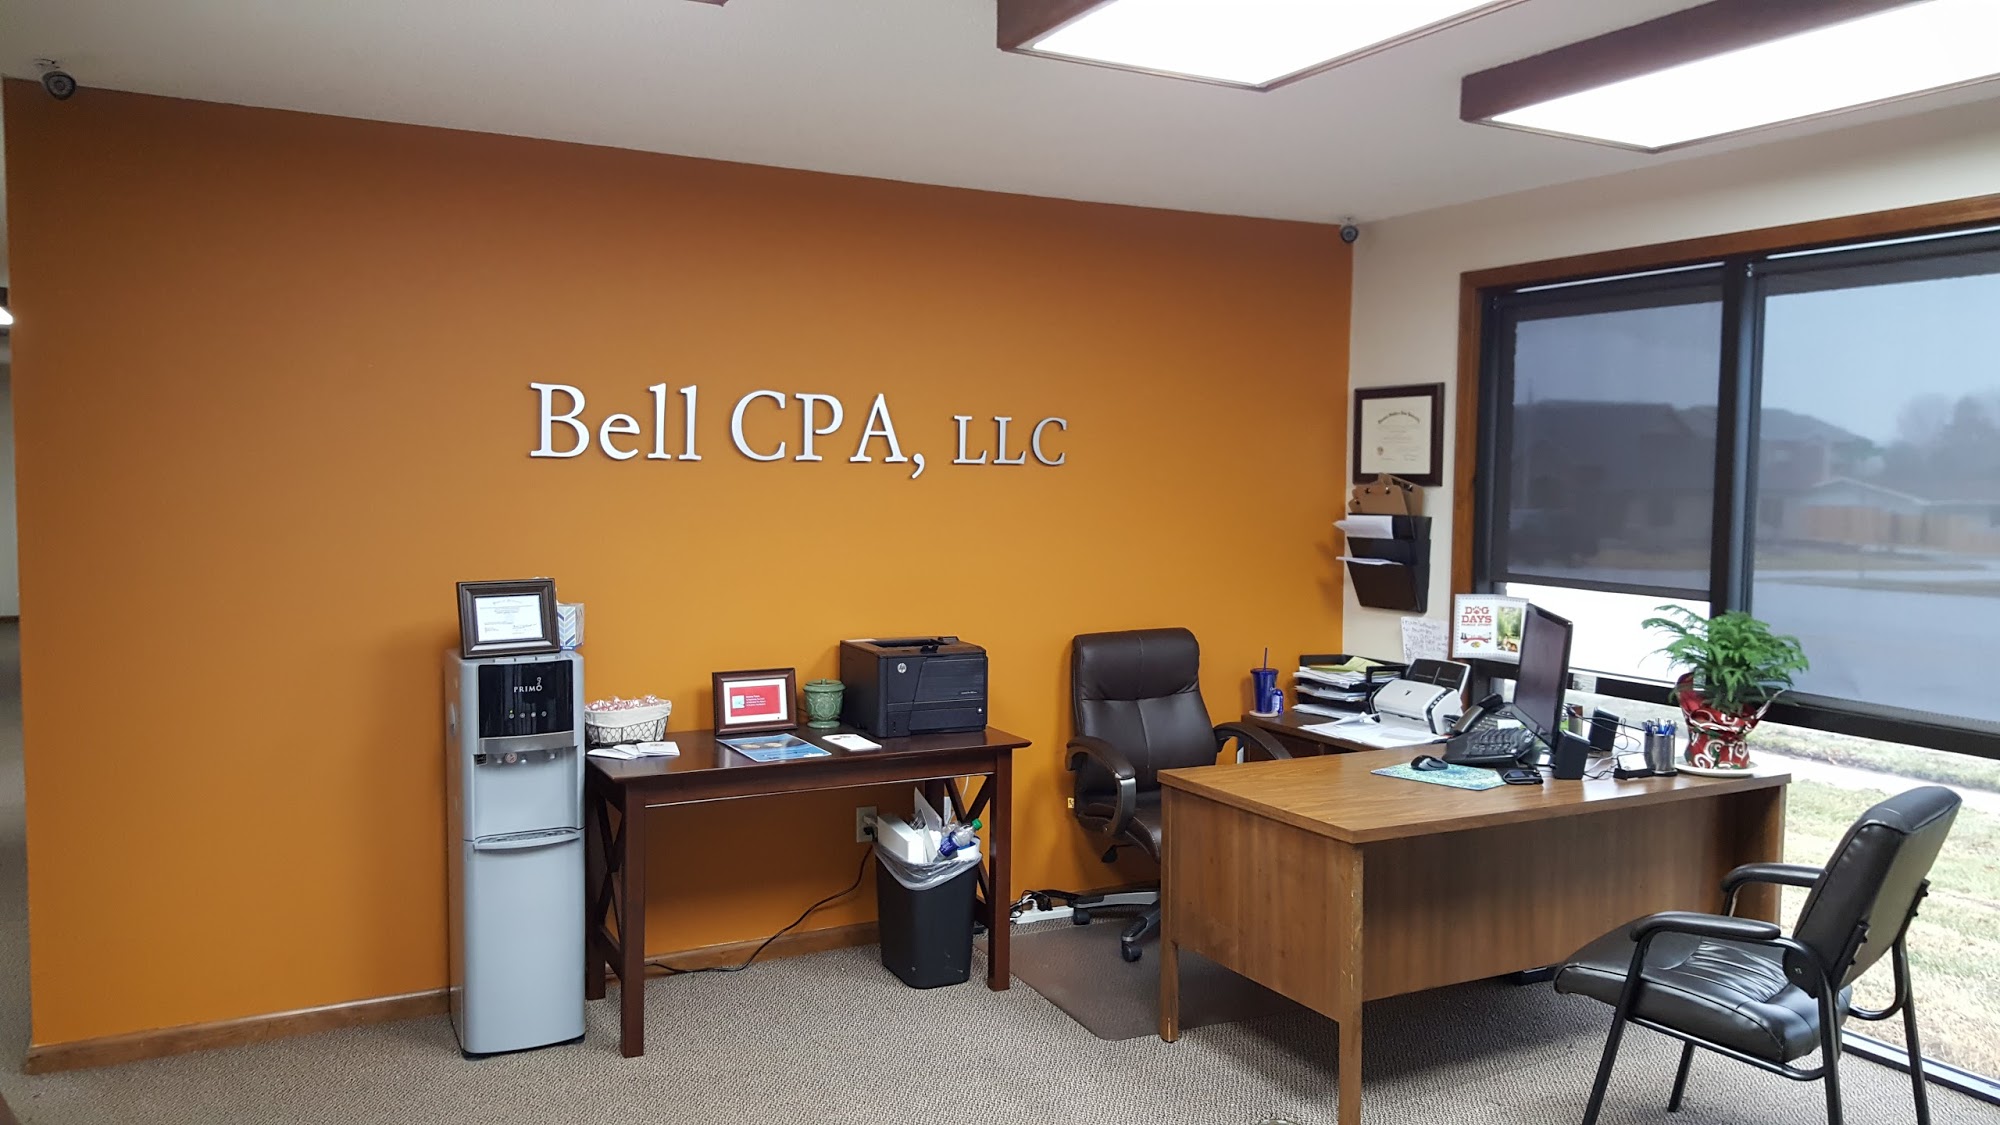 Bell CPA, LLC